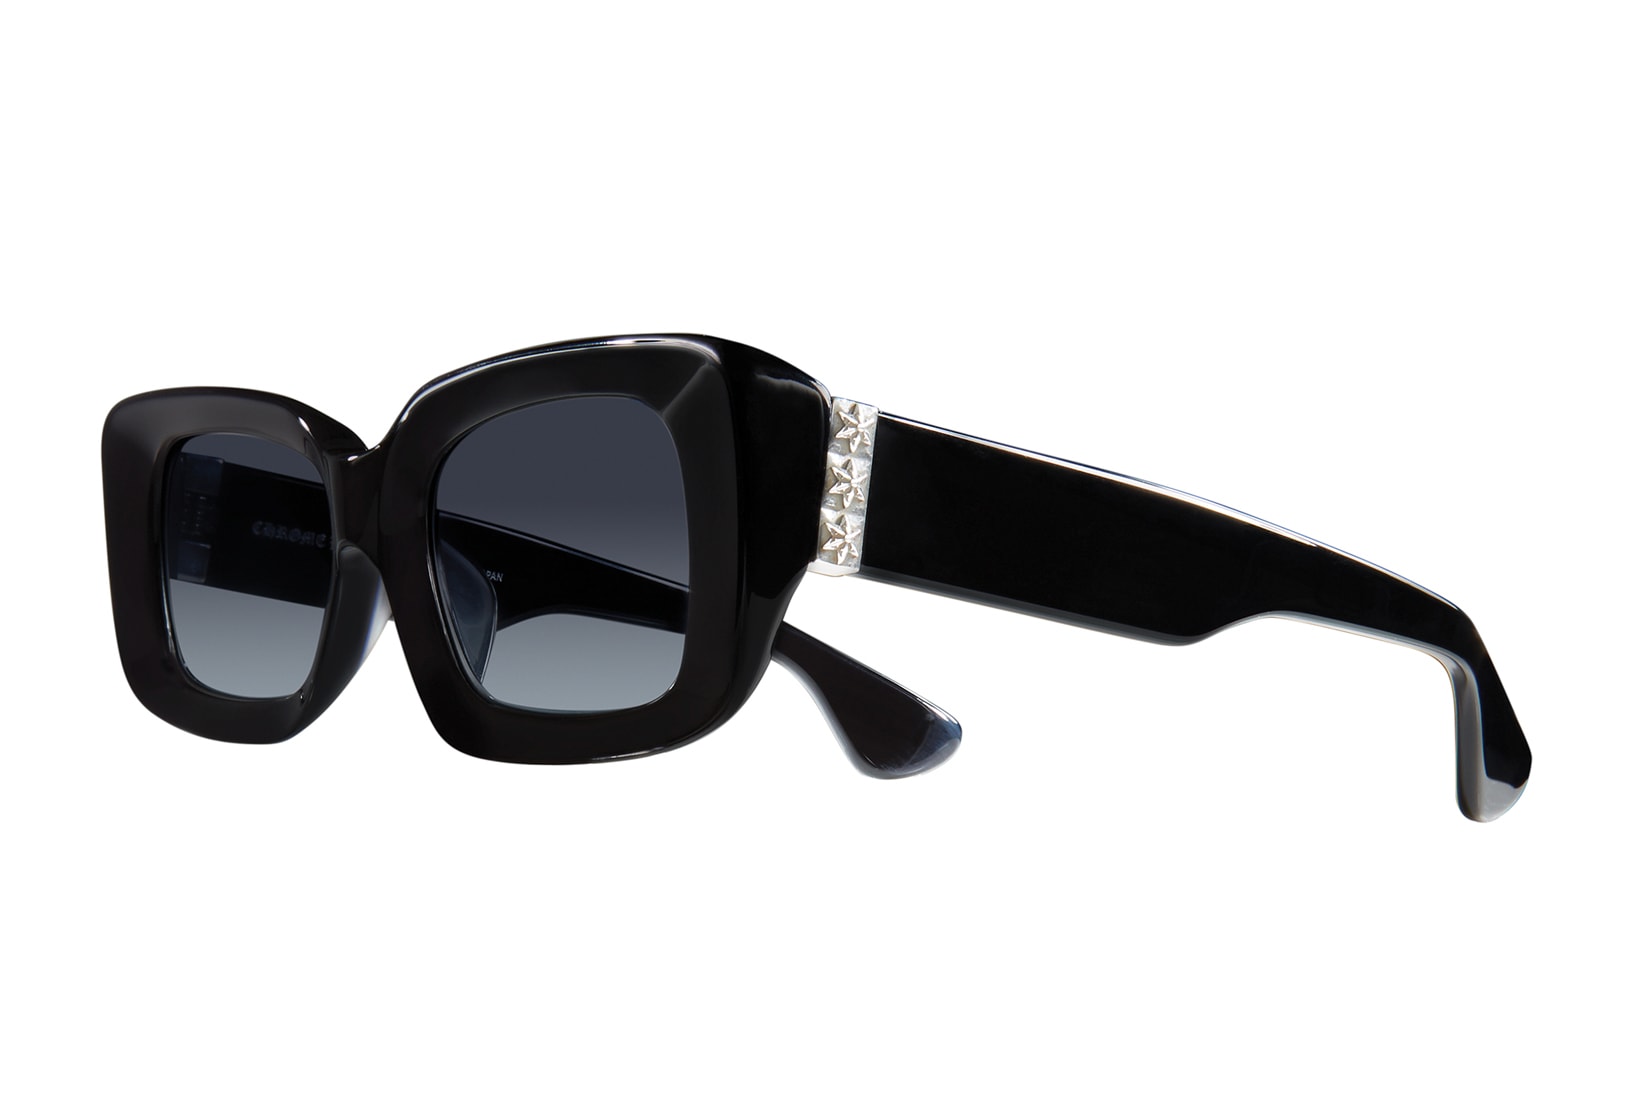 Chrome Hearts Sunglasses ESTRELLA BLACK Laurie Lynn Stark Capsule Collection